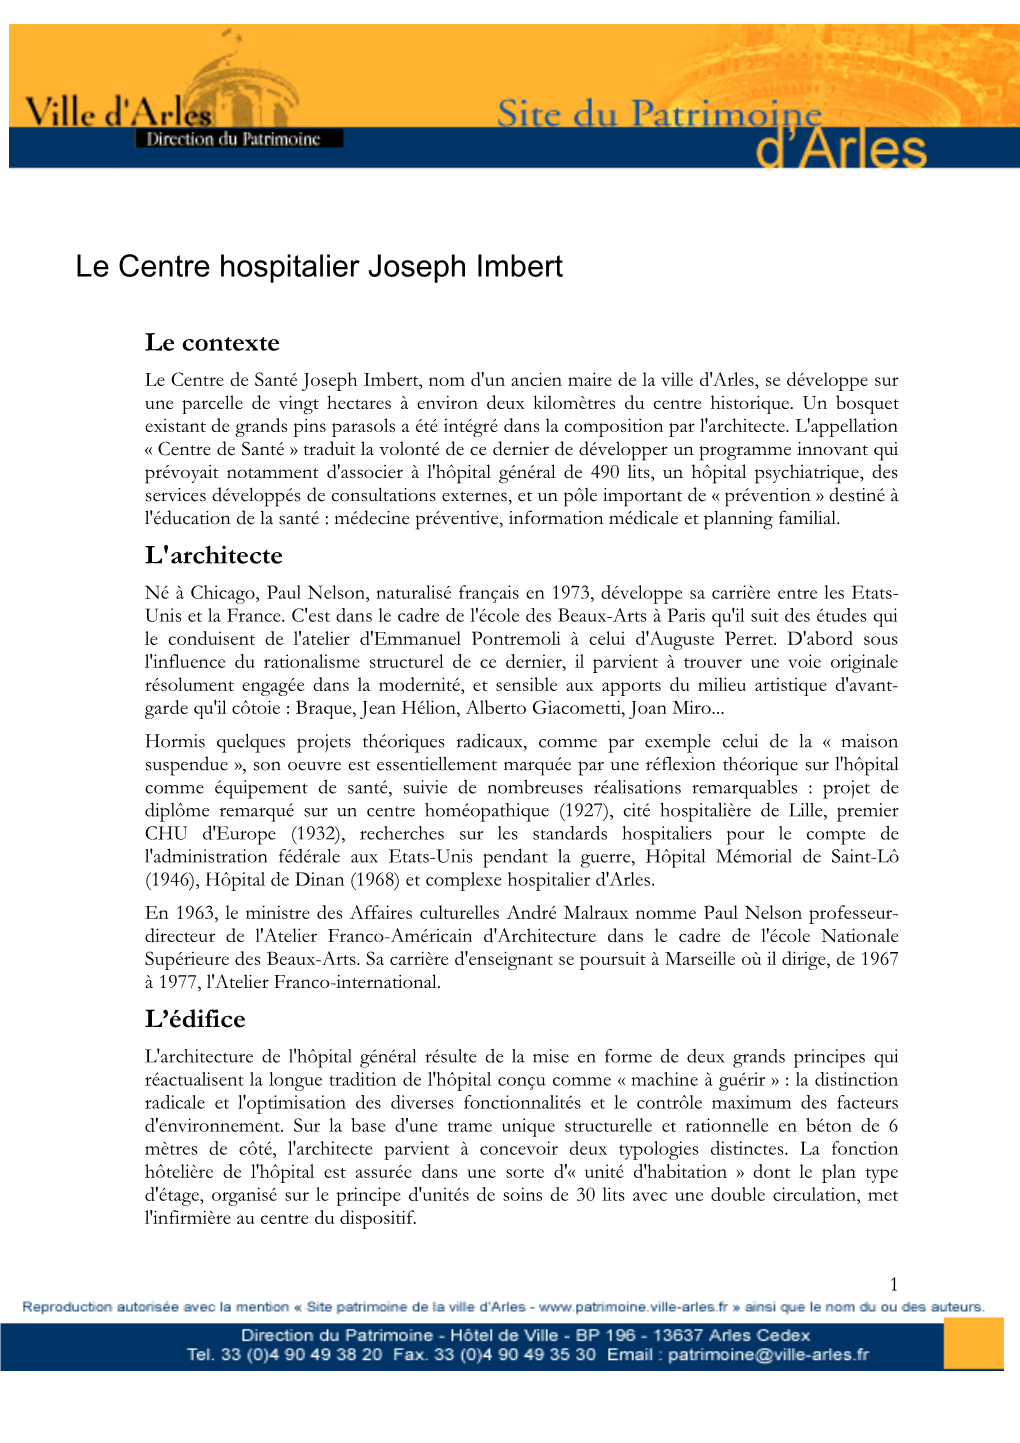 Le Centre Hospitalier Joseph Imbert